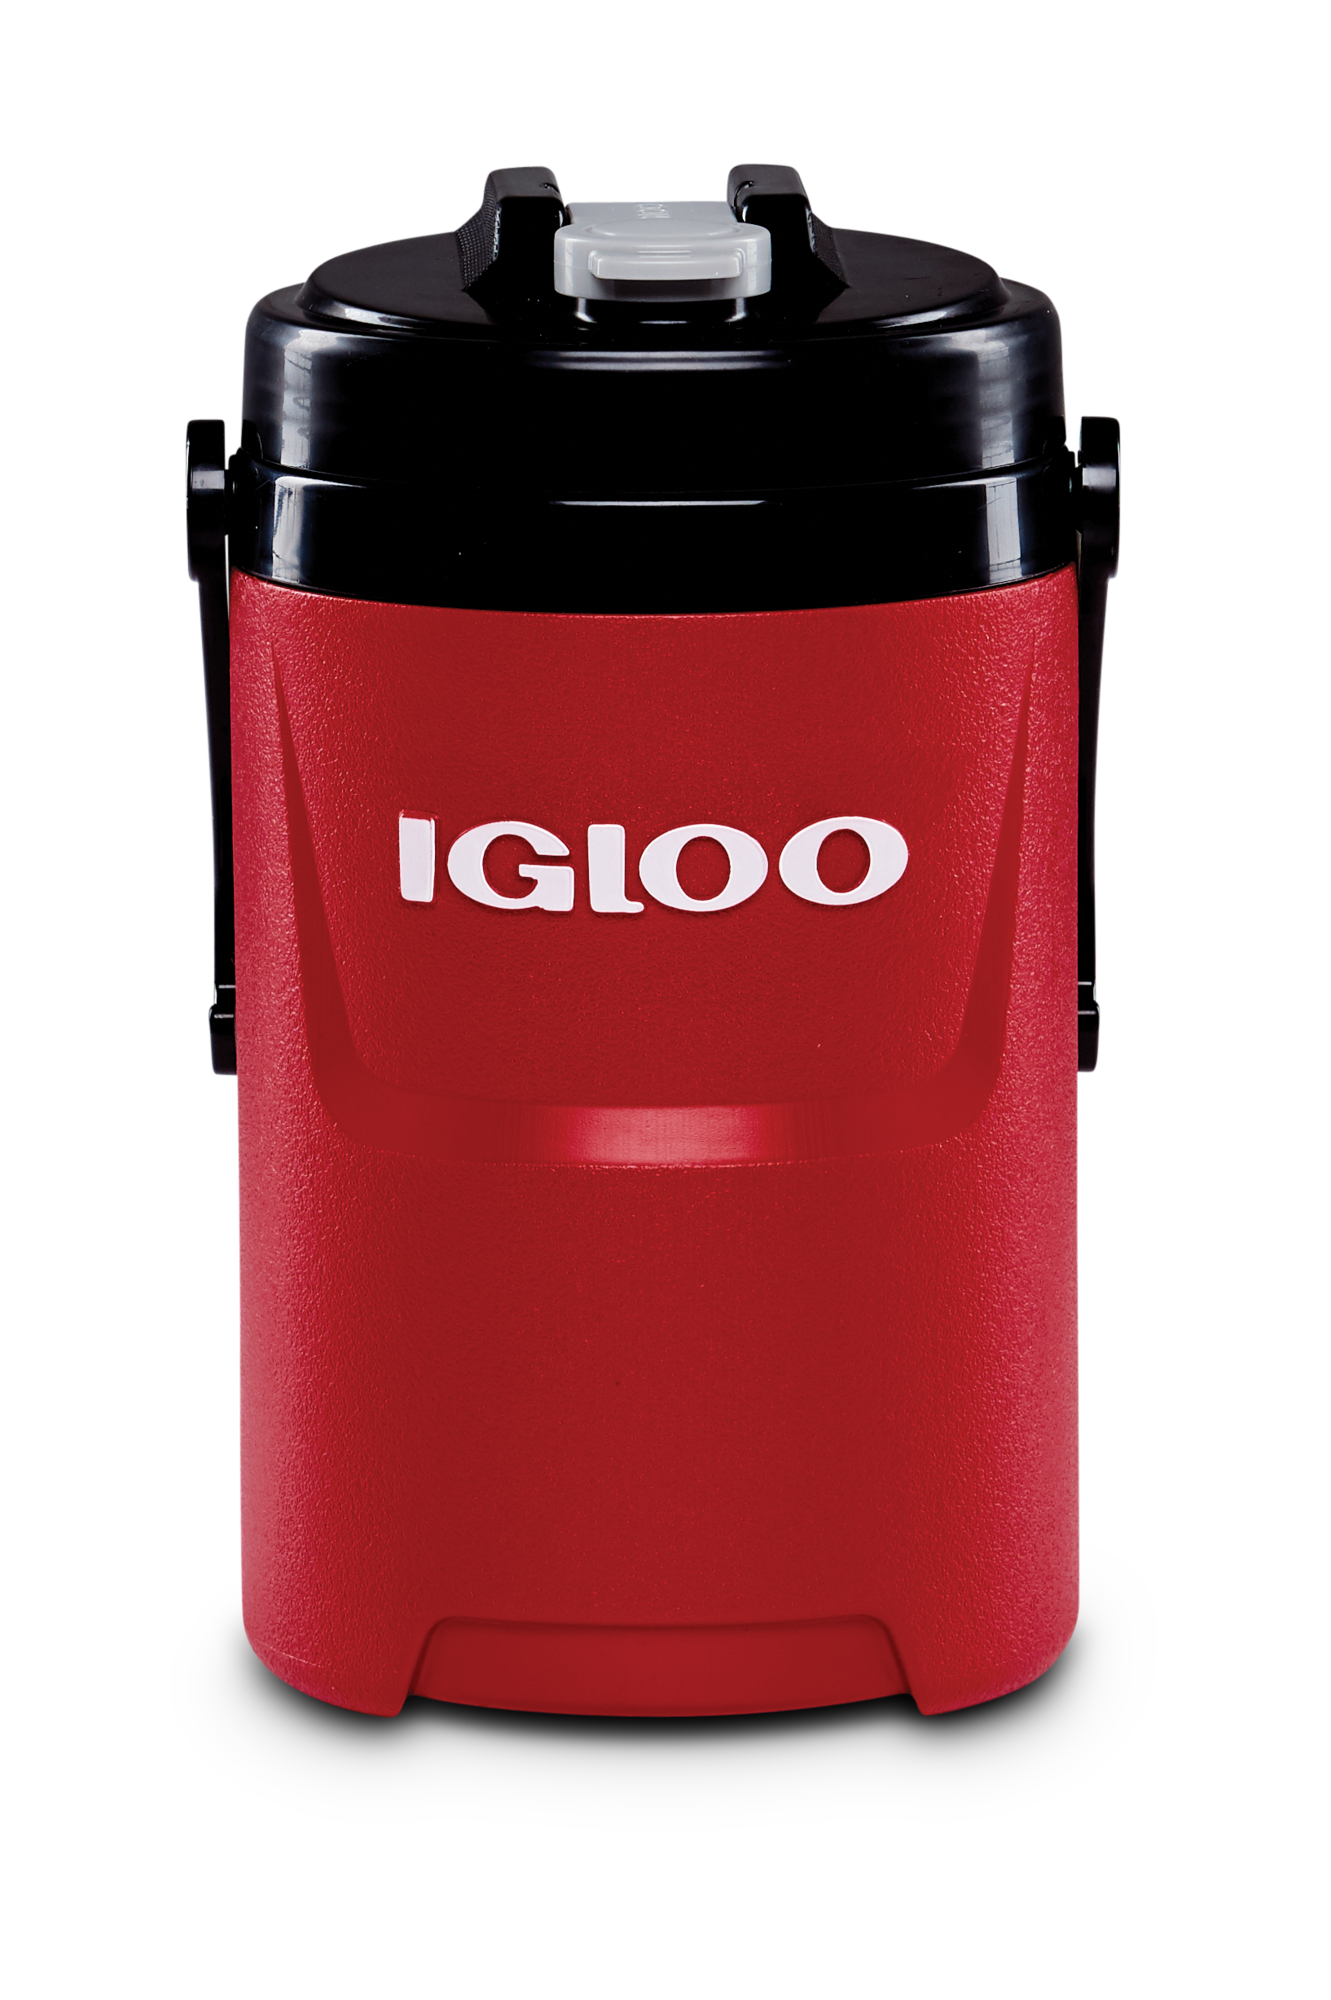 Igloo 1/2-Gallon Laguna Pro Beverage Cooler - Red - image 1 of 6